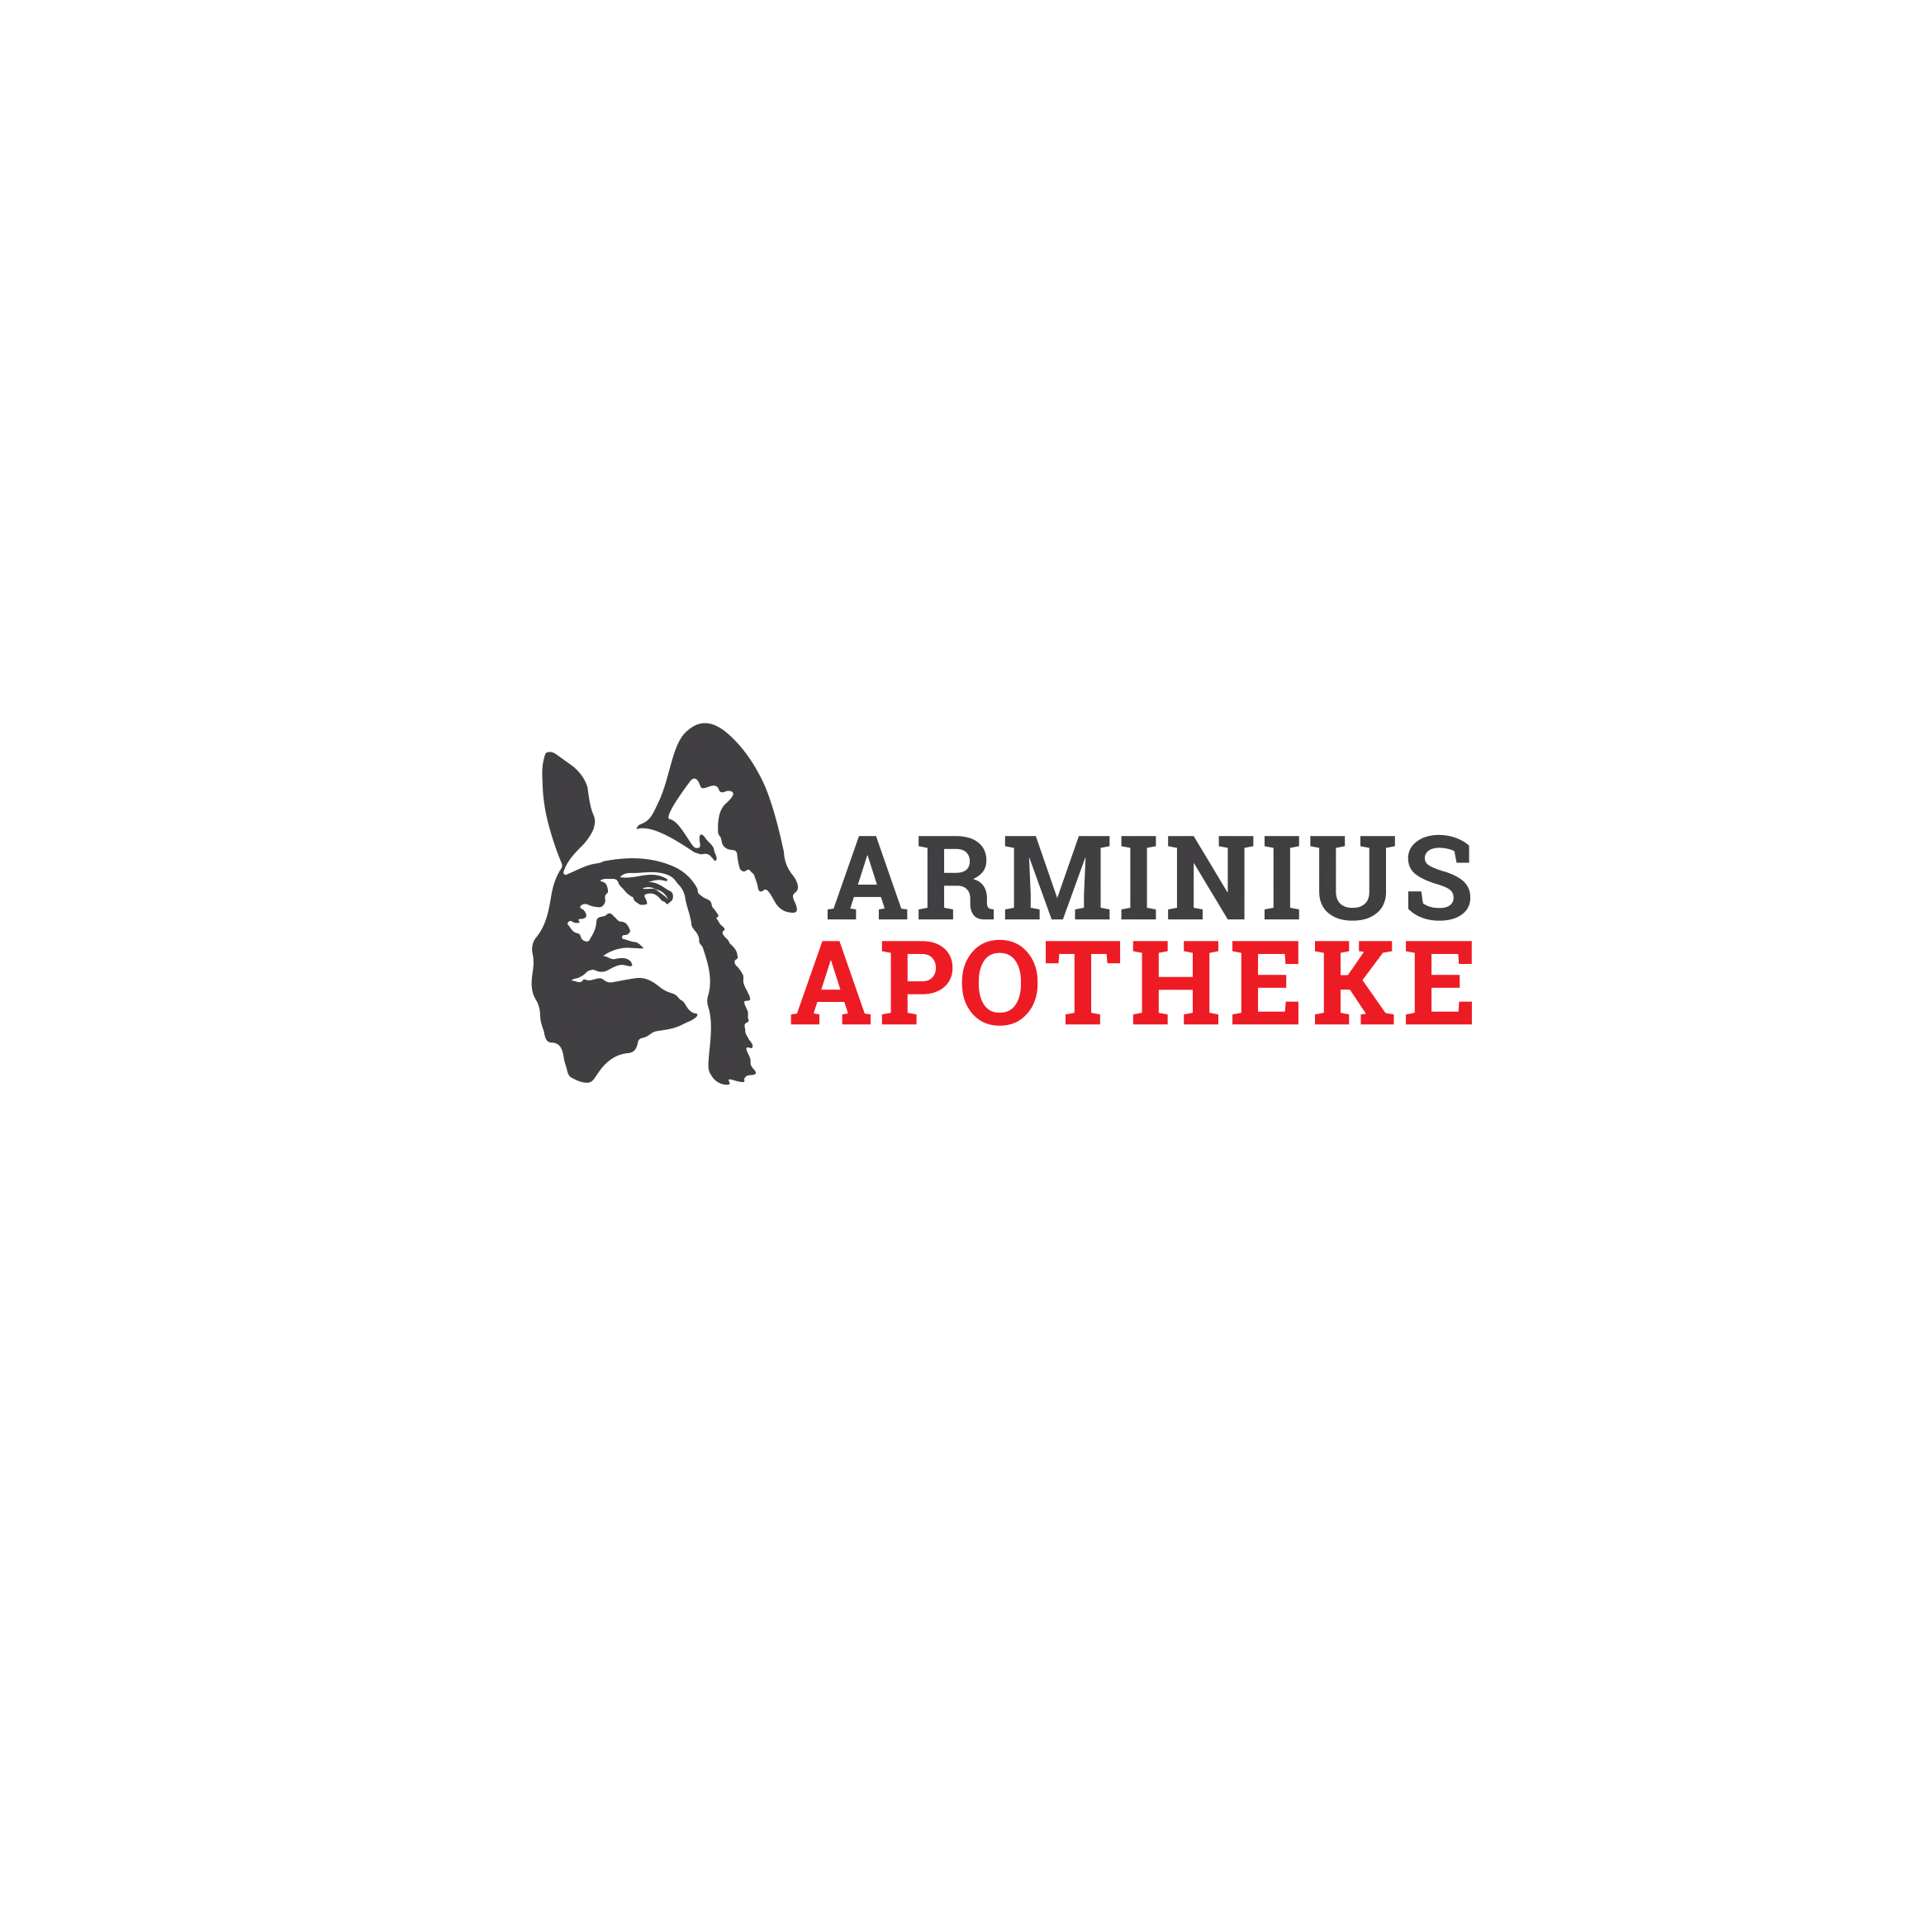 Arminius Apotheke in Bielefeld - Logo